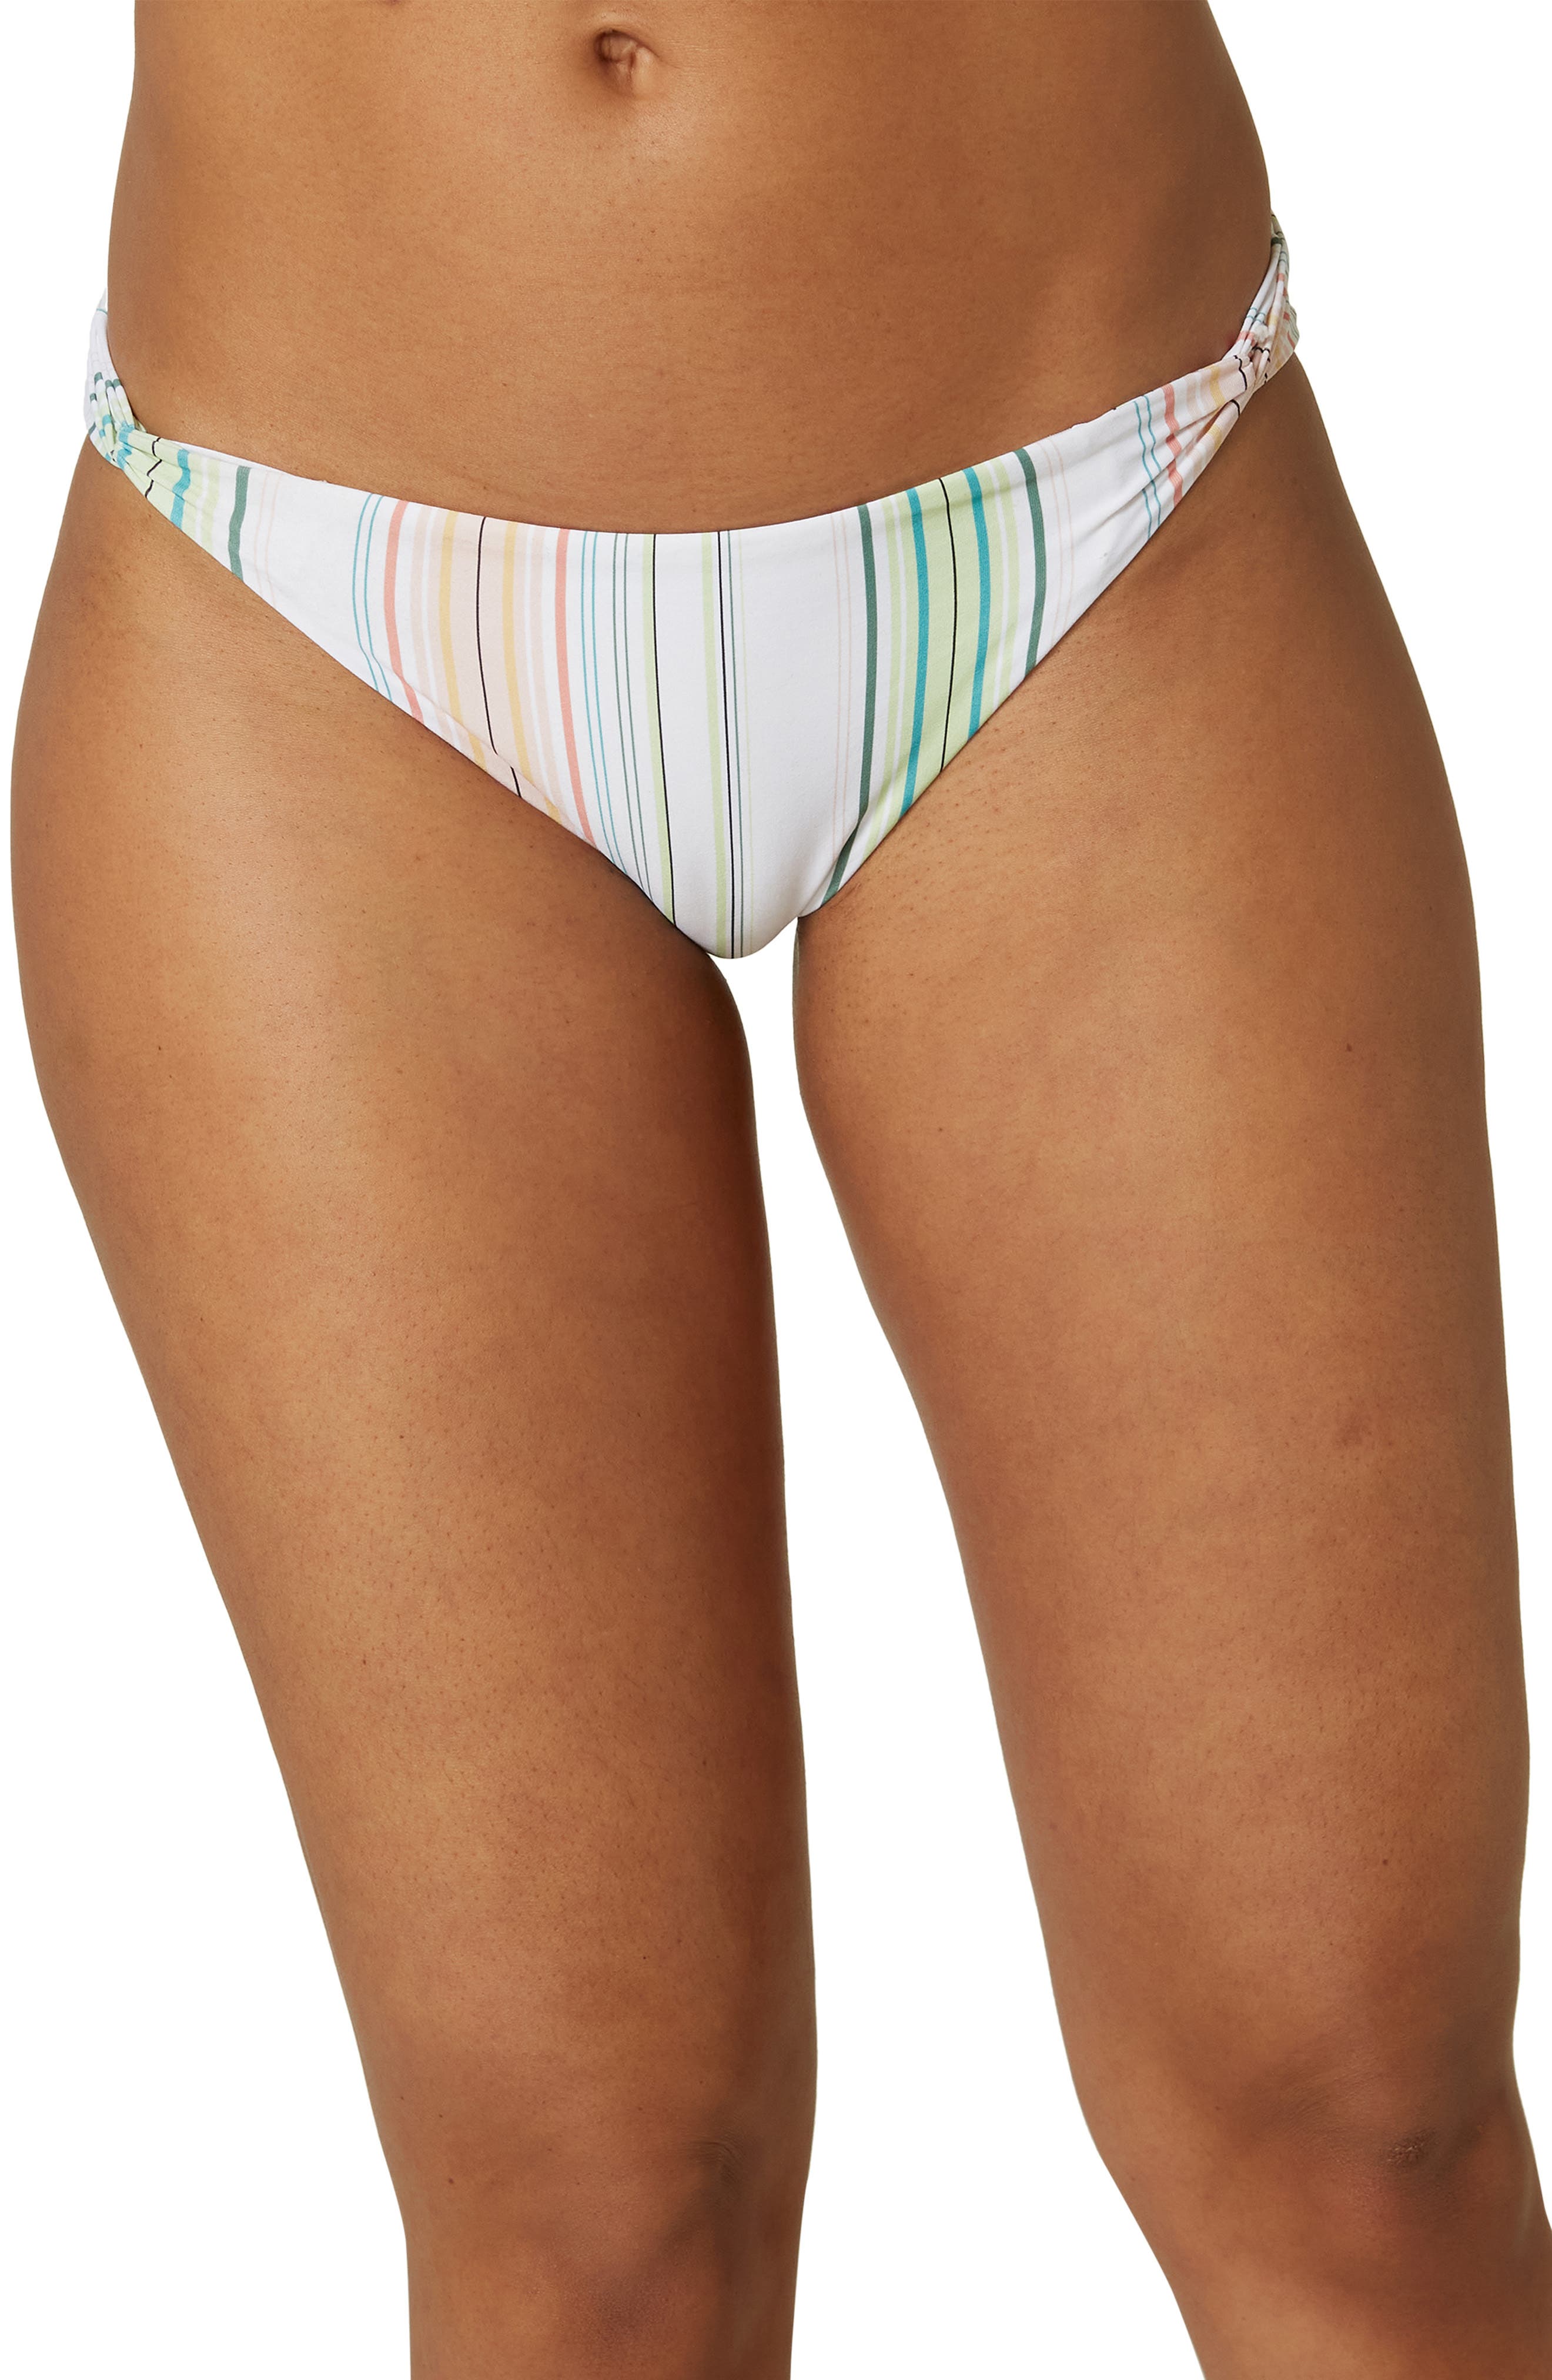 Details about   O'neill Superkini Bondey Womens Beachwear Bikini Bottoms Mauve Ridge All Sizes 